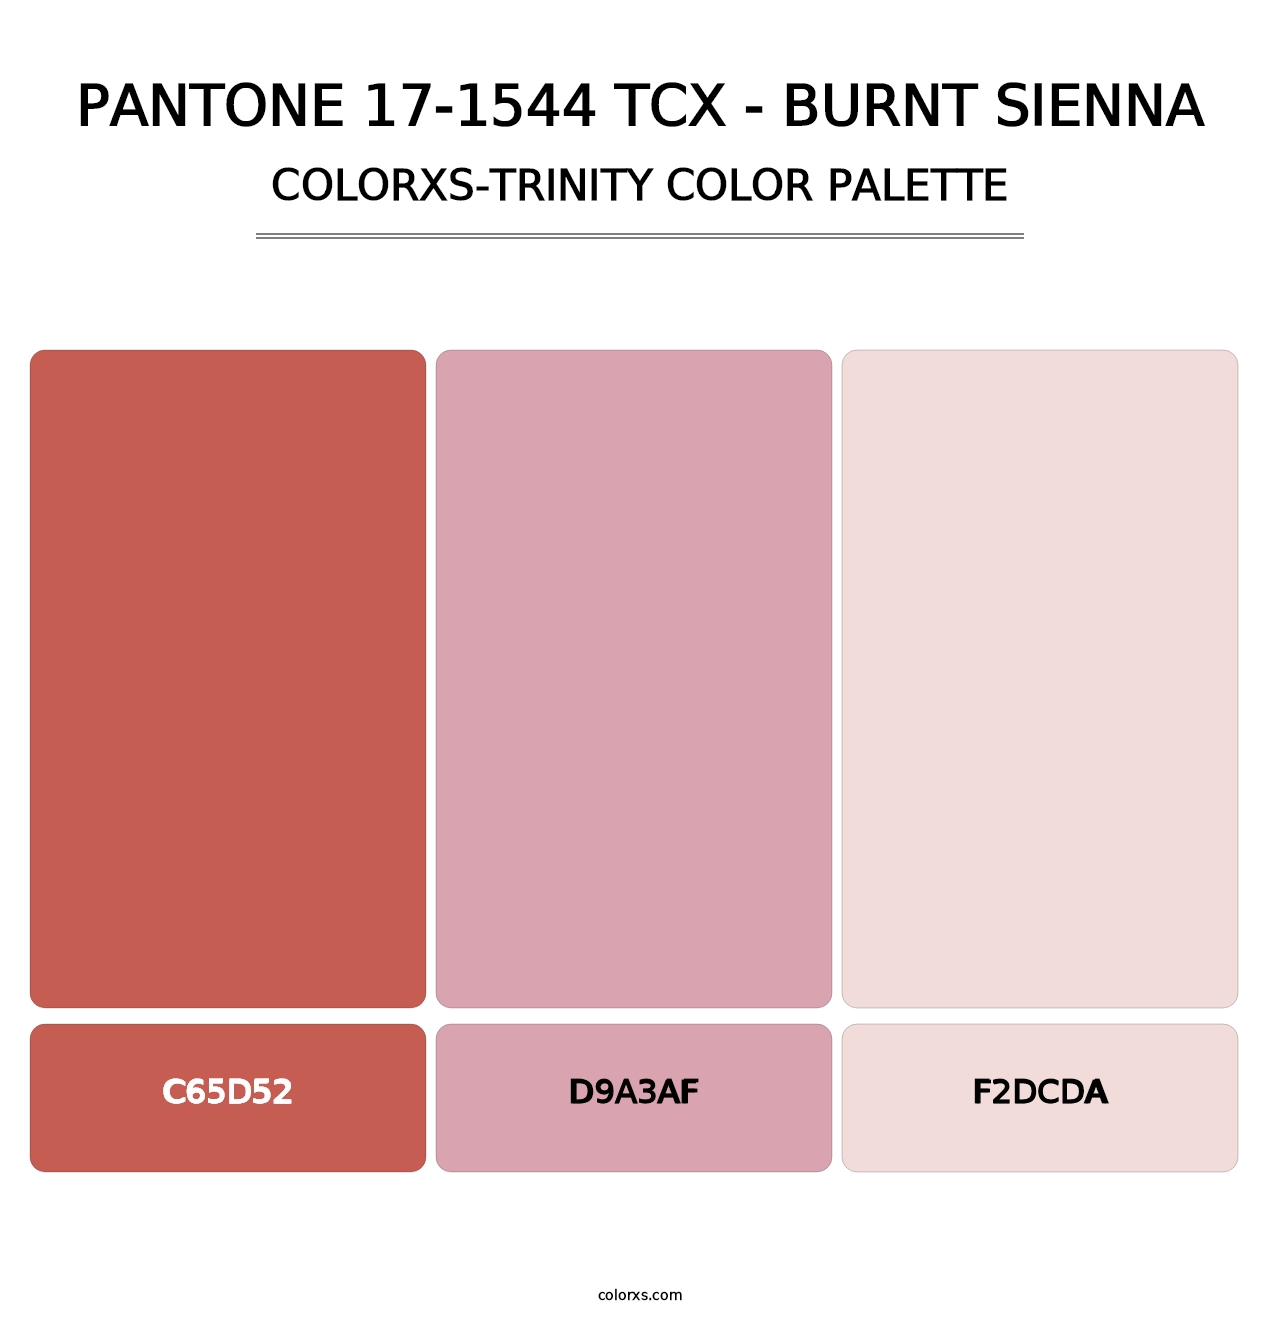 PANTONE 17-1544 TCX - Burnt Sienna - Colorxs Trinity Palette